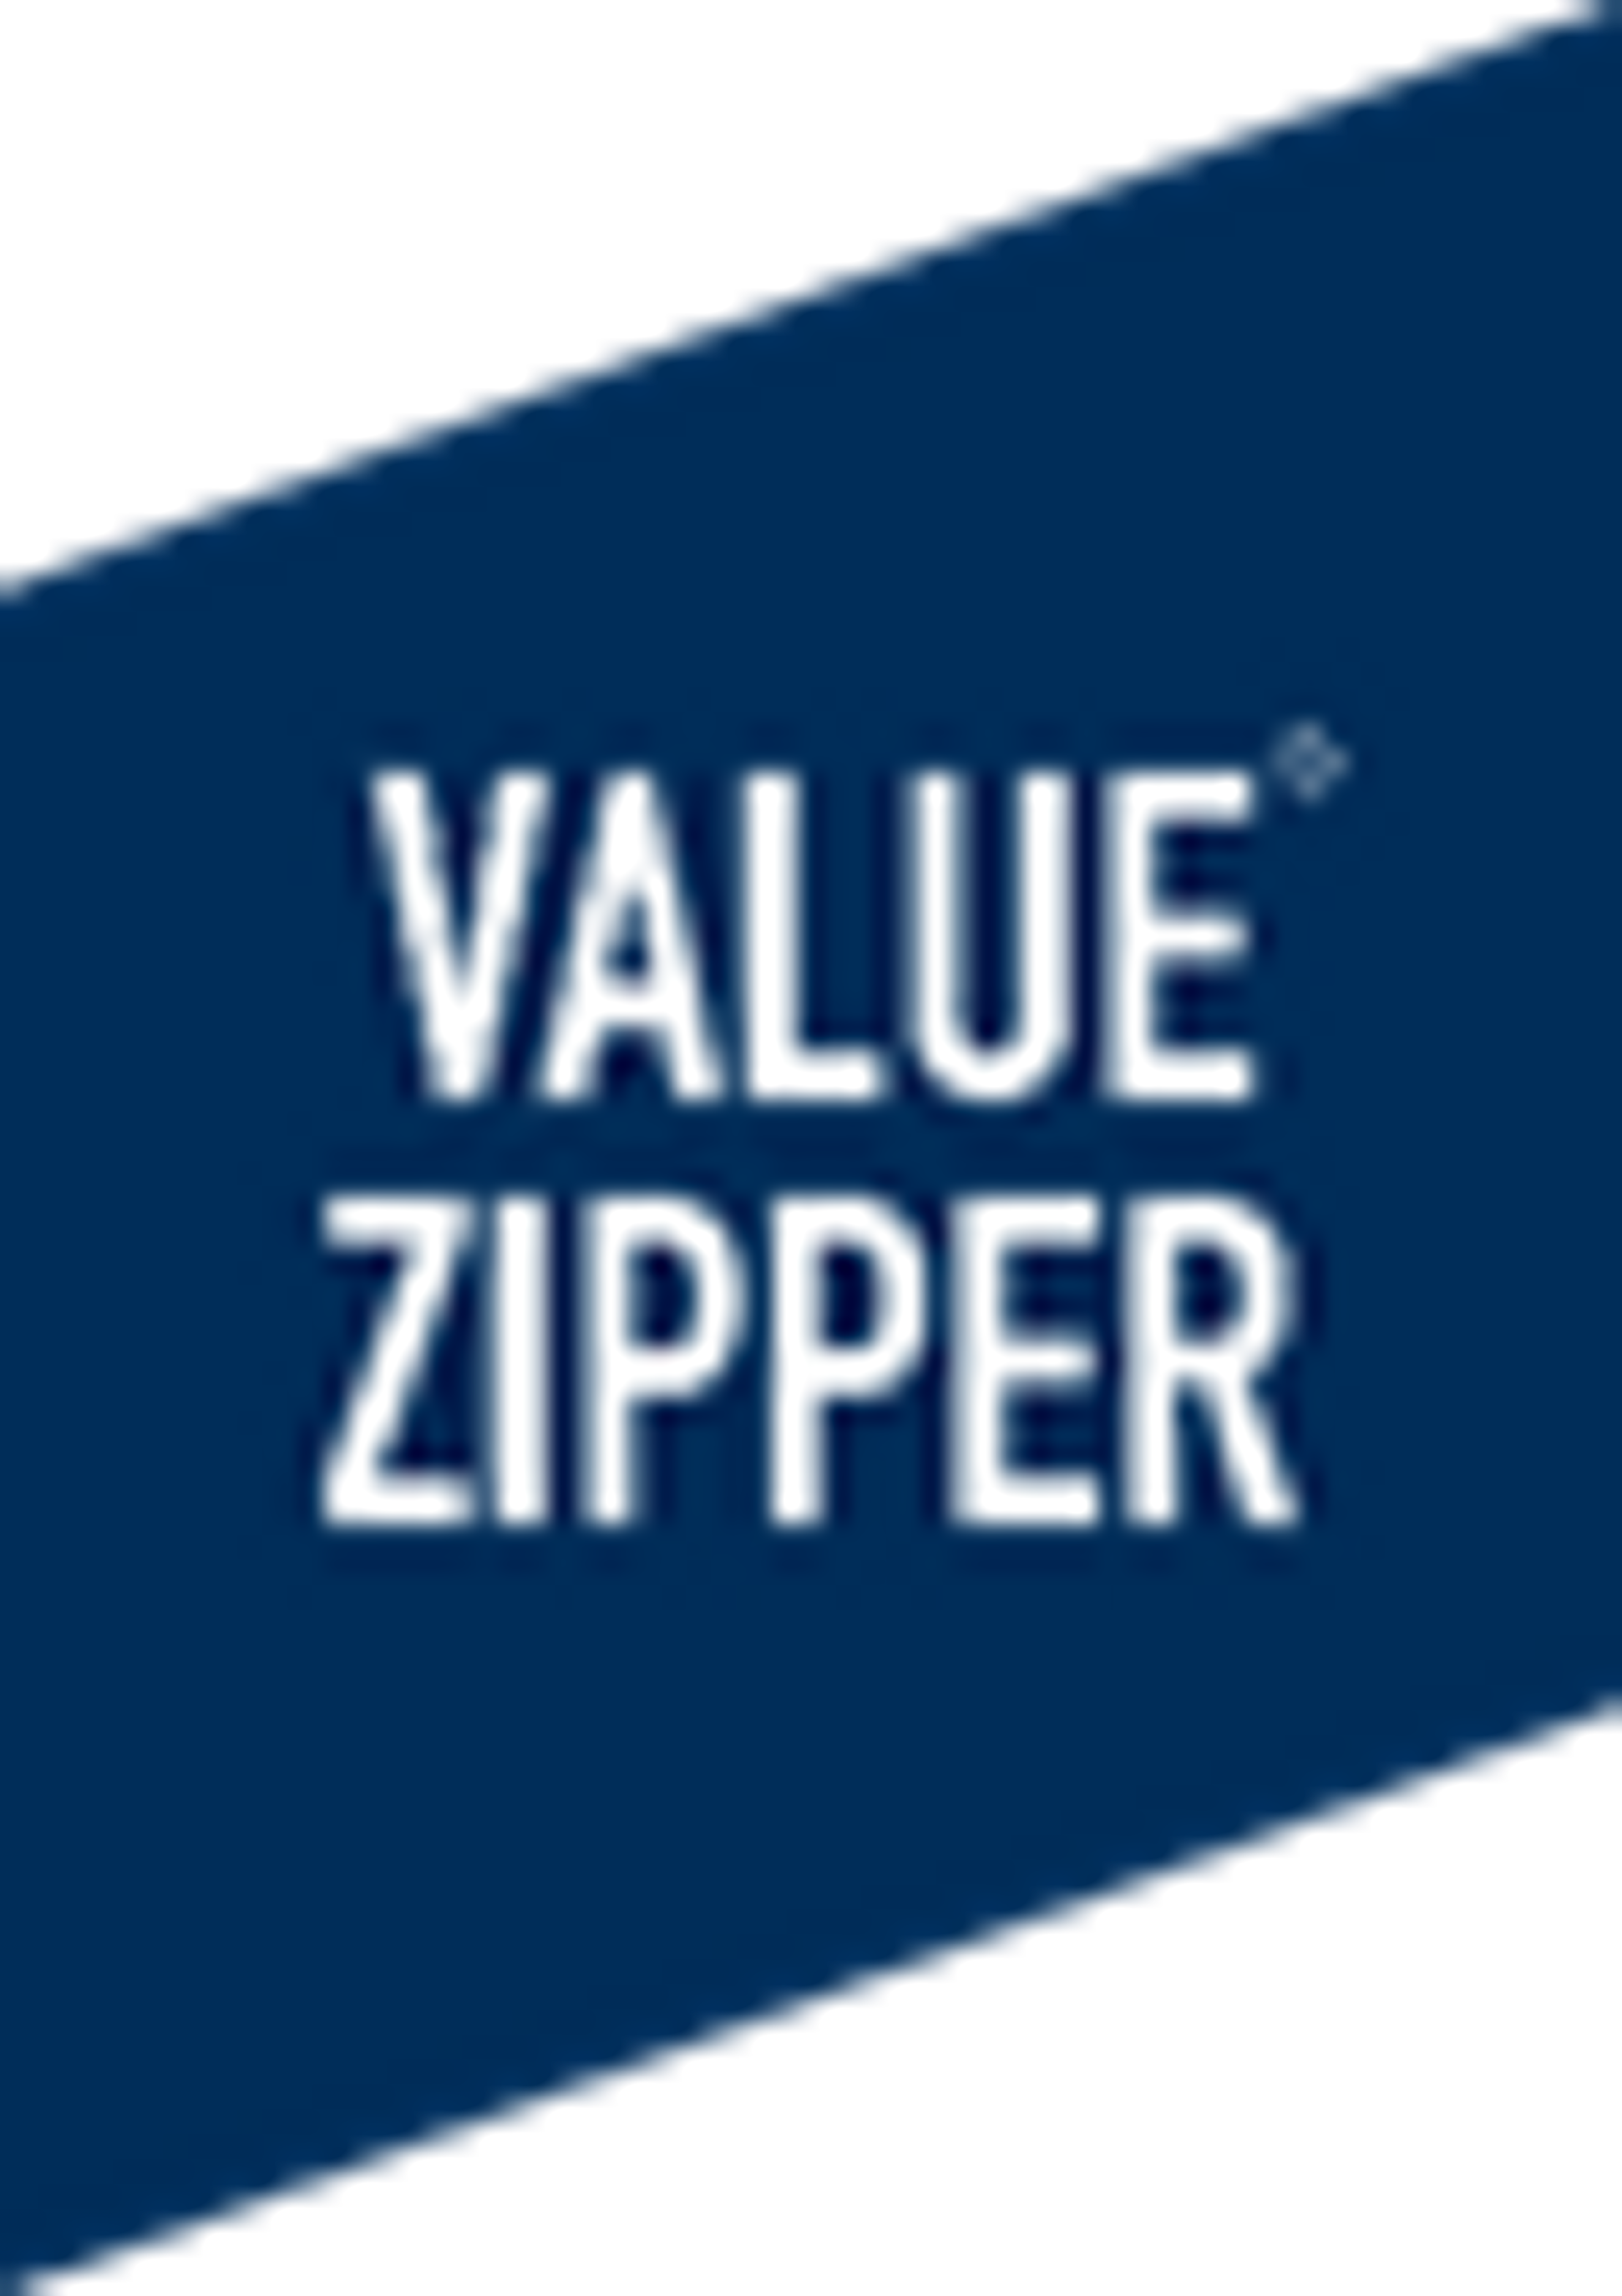 Value Zipper in OOH